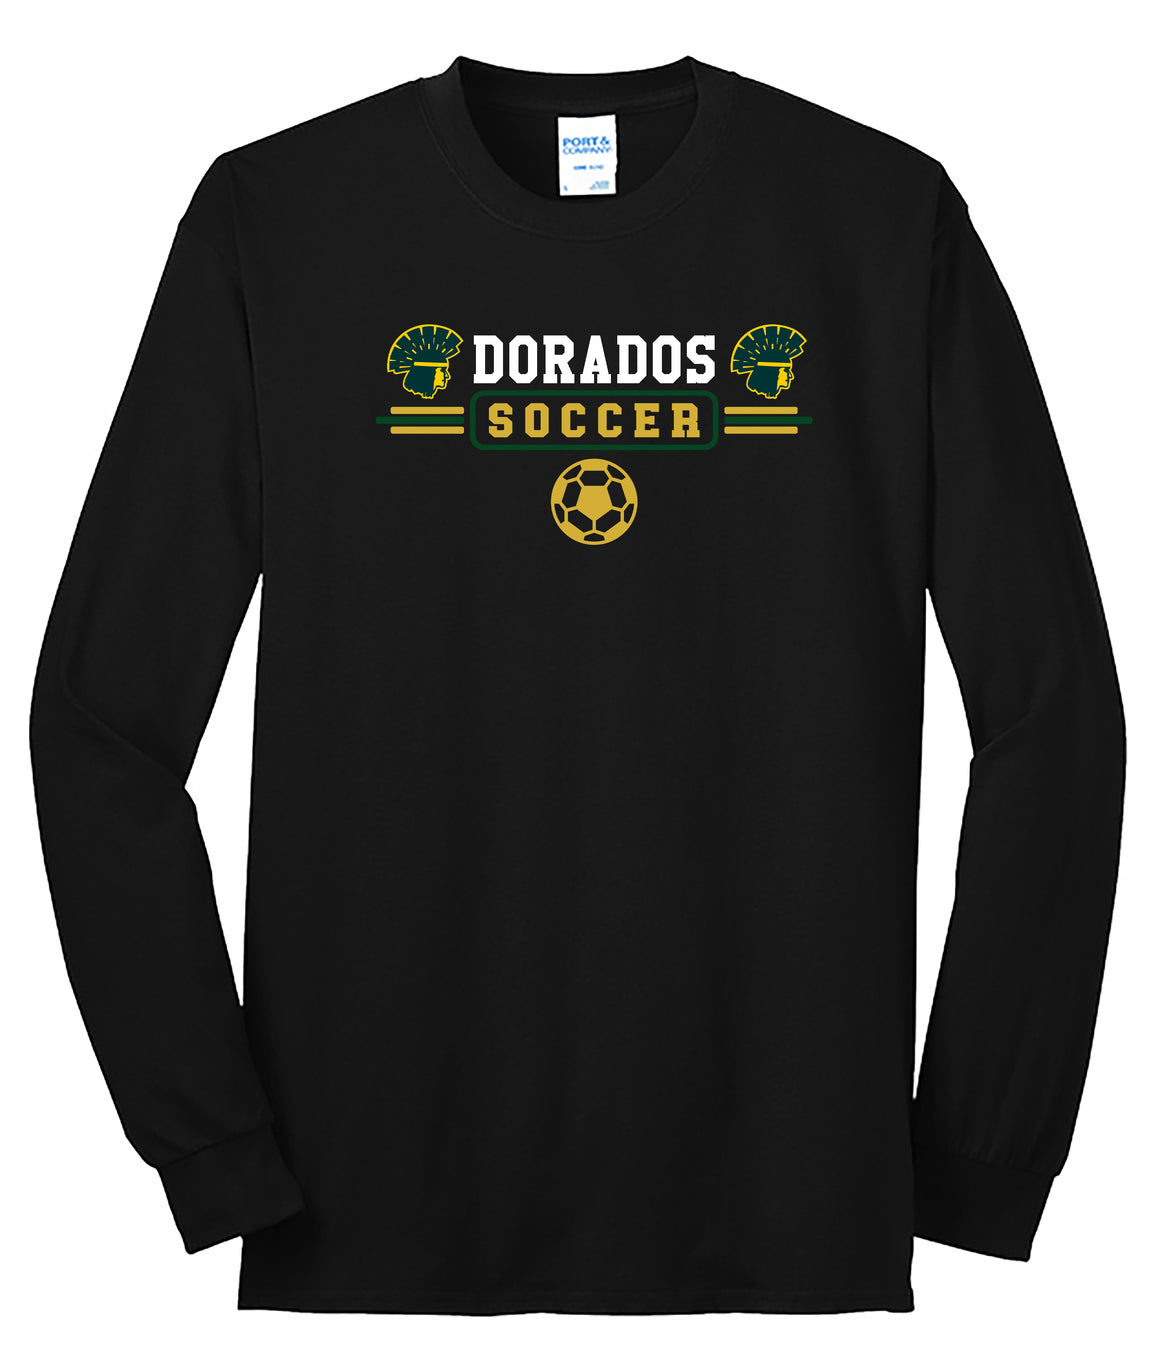 Canyon del Oro Long Sleeve Shirt - Soccer Print